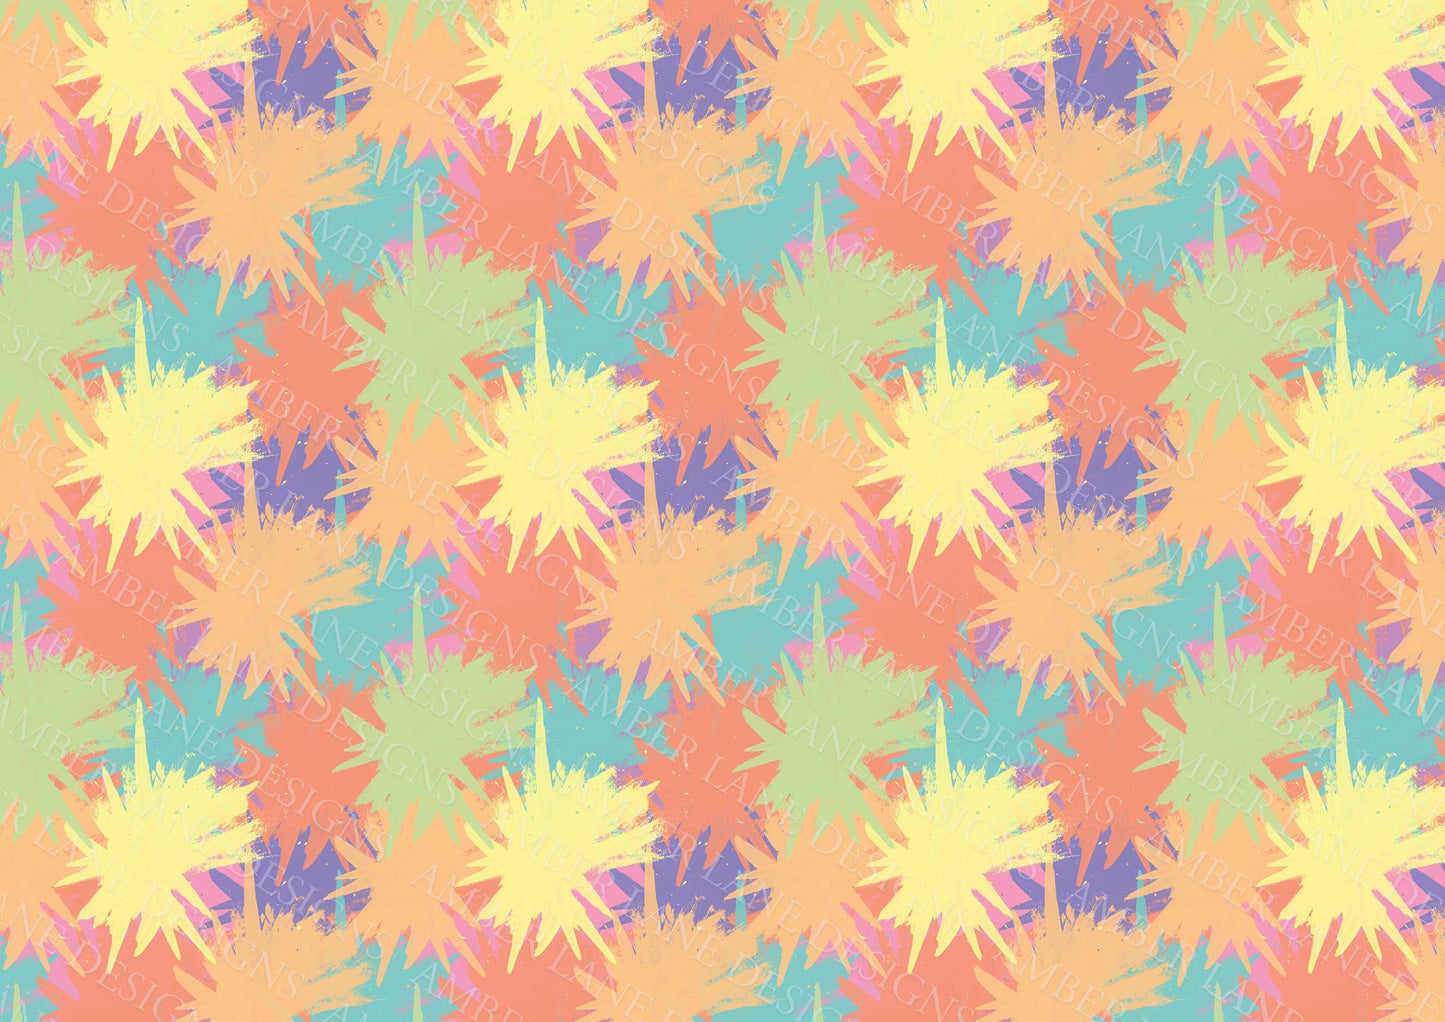 SEAMLESS Pastel Paint Splats Paper 12x12 inches, jpeg file.